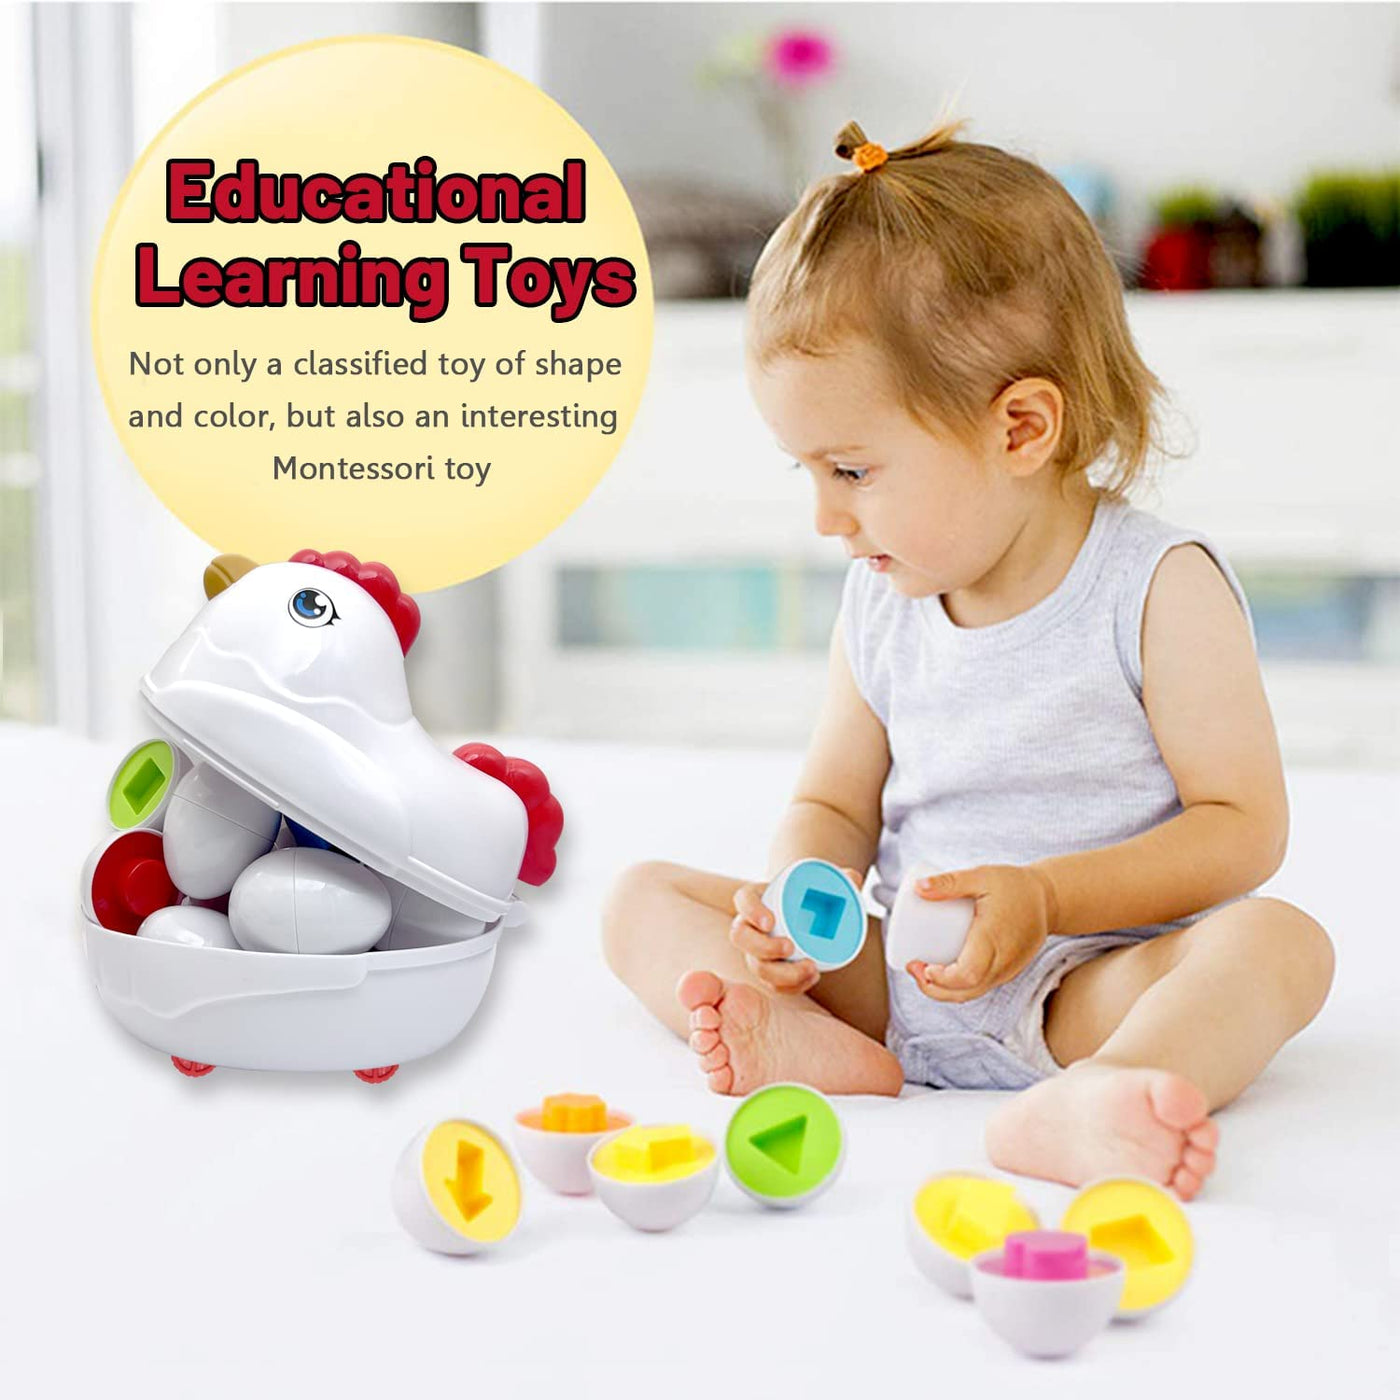 Matching Eggs Toddler Montessori Toy